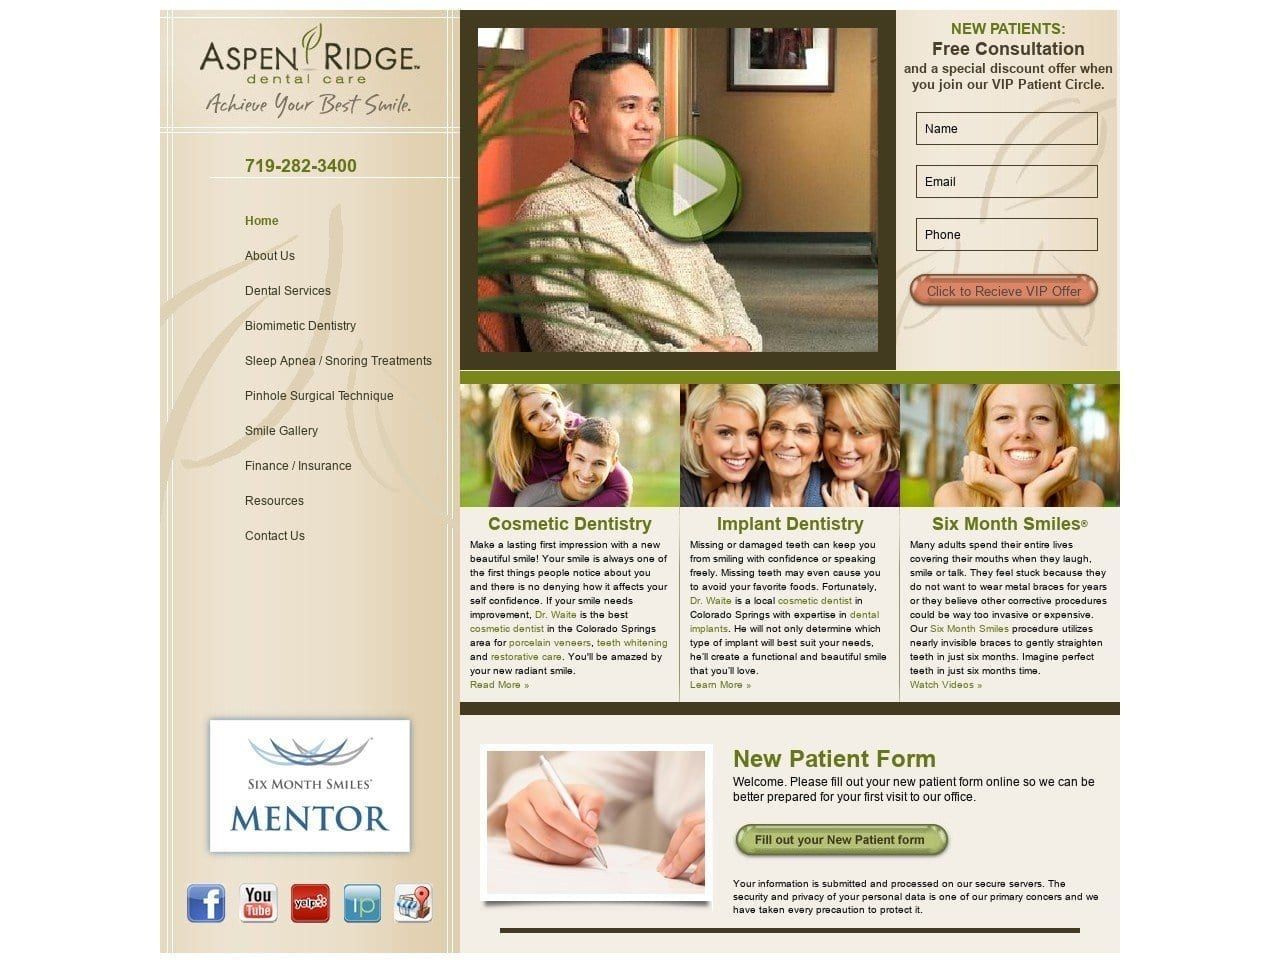 Aspen Ridge Dental Care Website Screenshot from aspenridgedentalcare.com